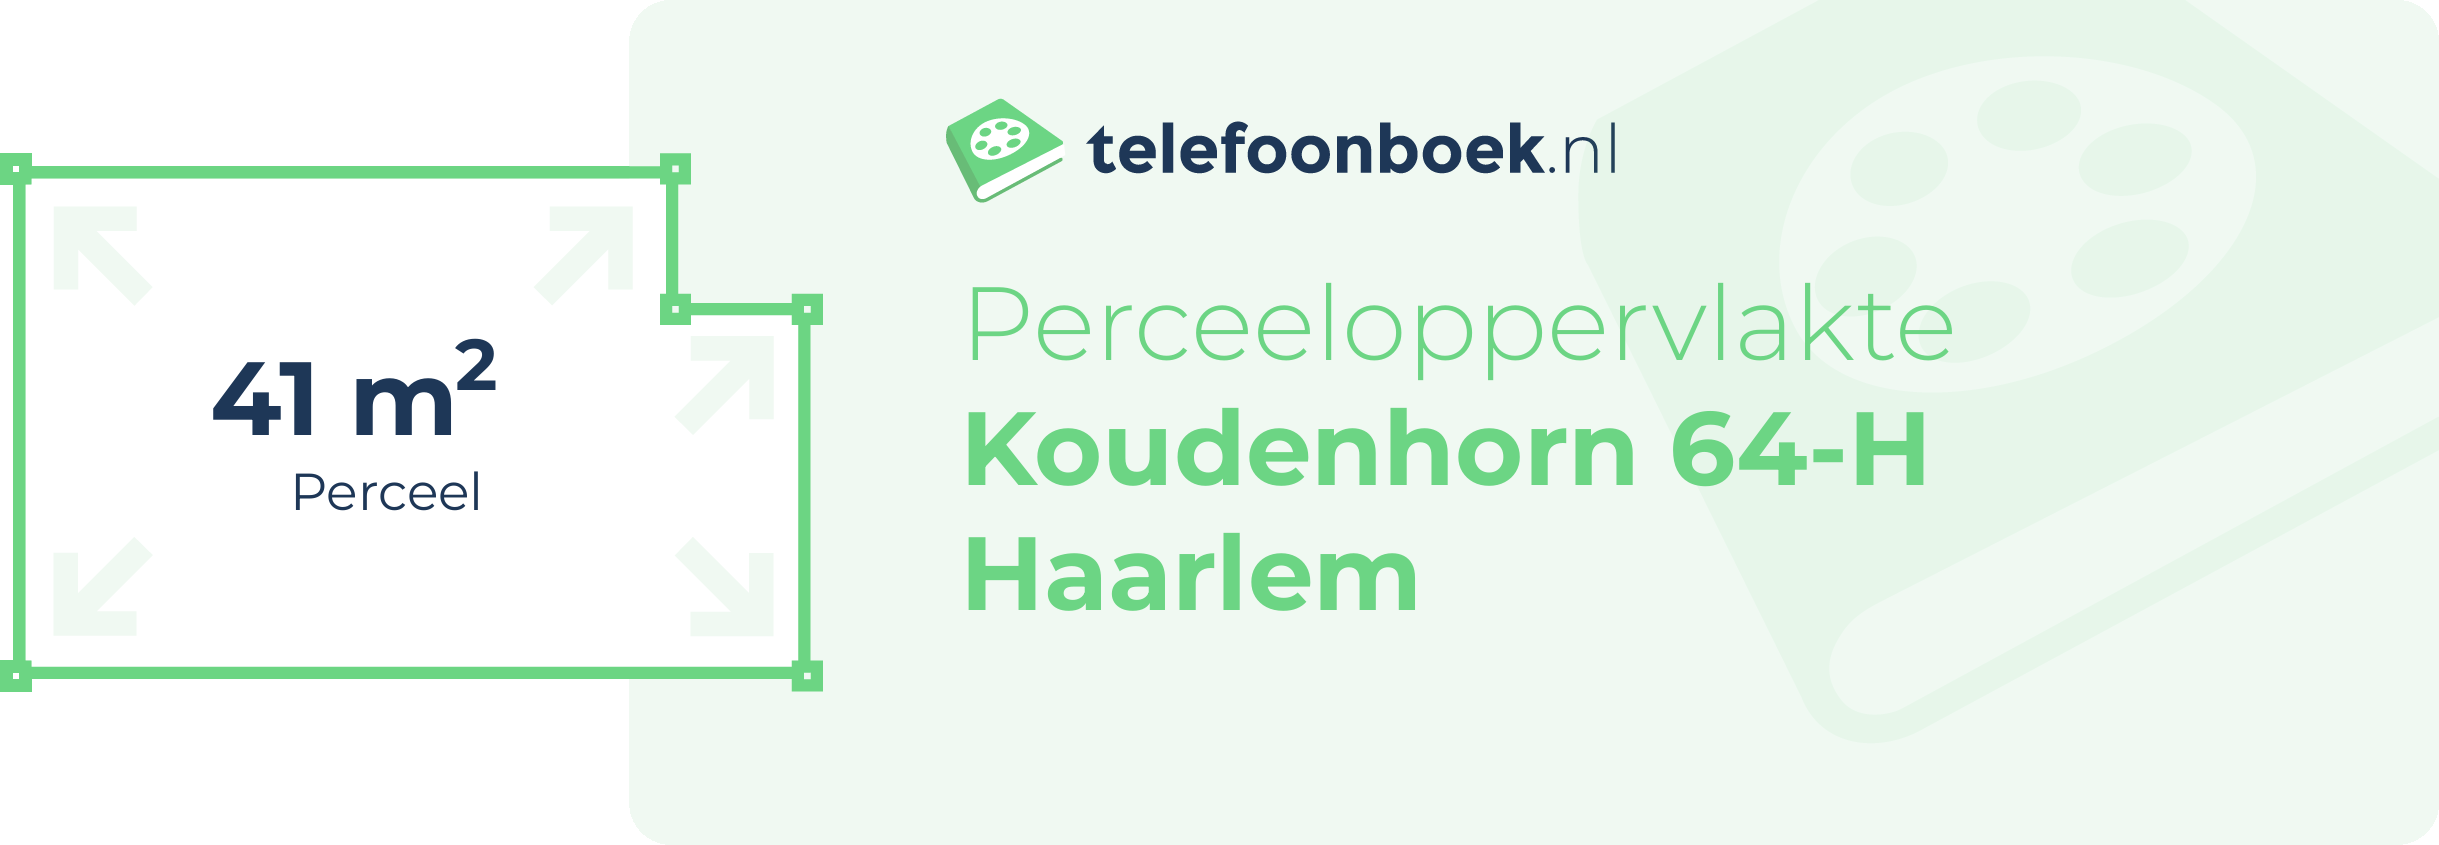 Perceeloppervlakte Koudenhorn 64-H Haarlem